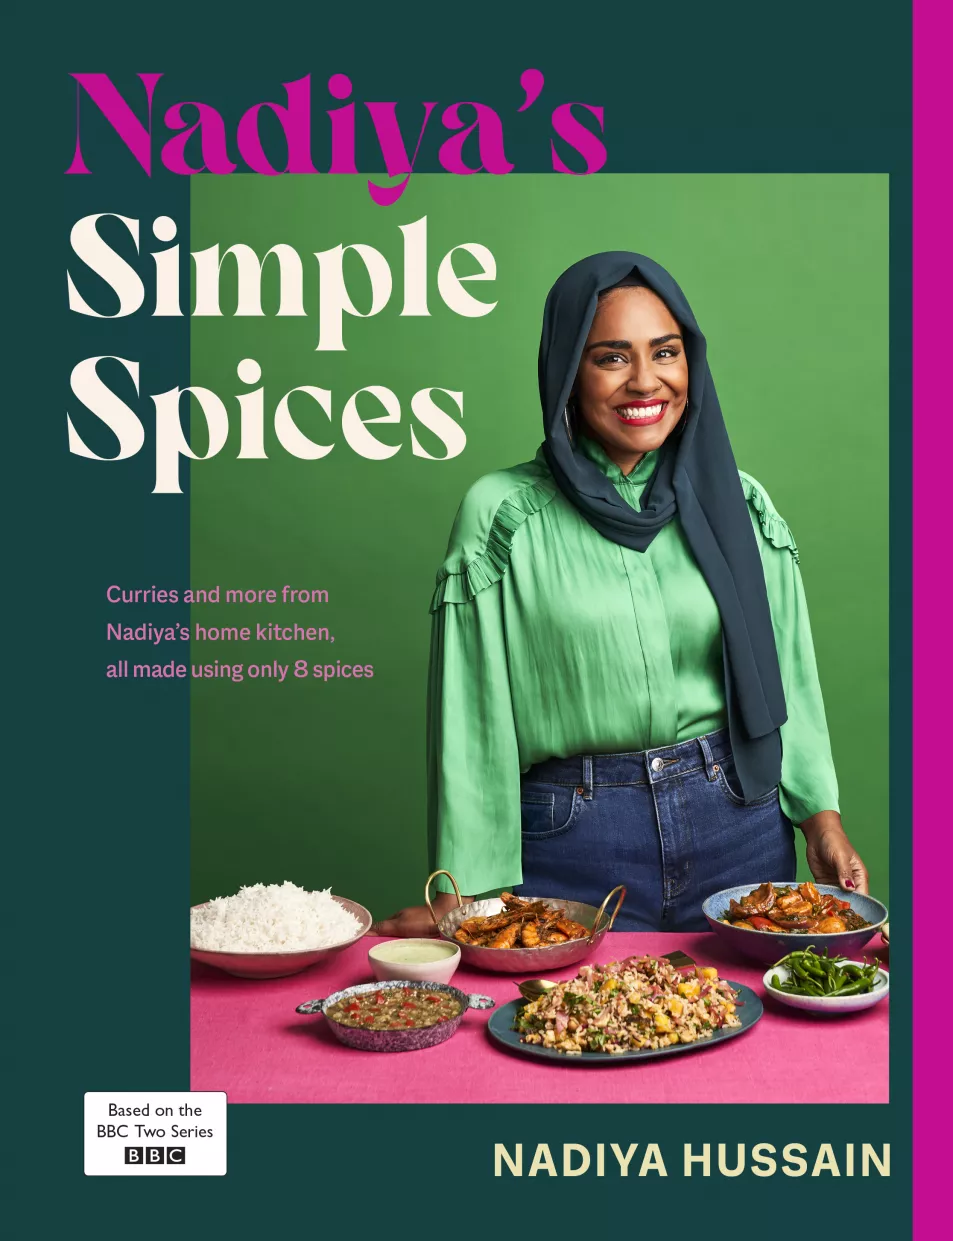 Nadiya's Simple Spices by Nadiya Hussain